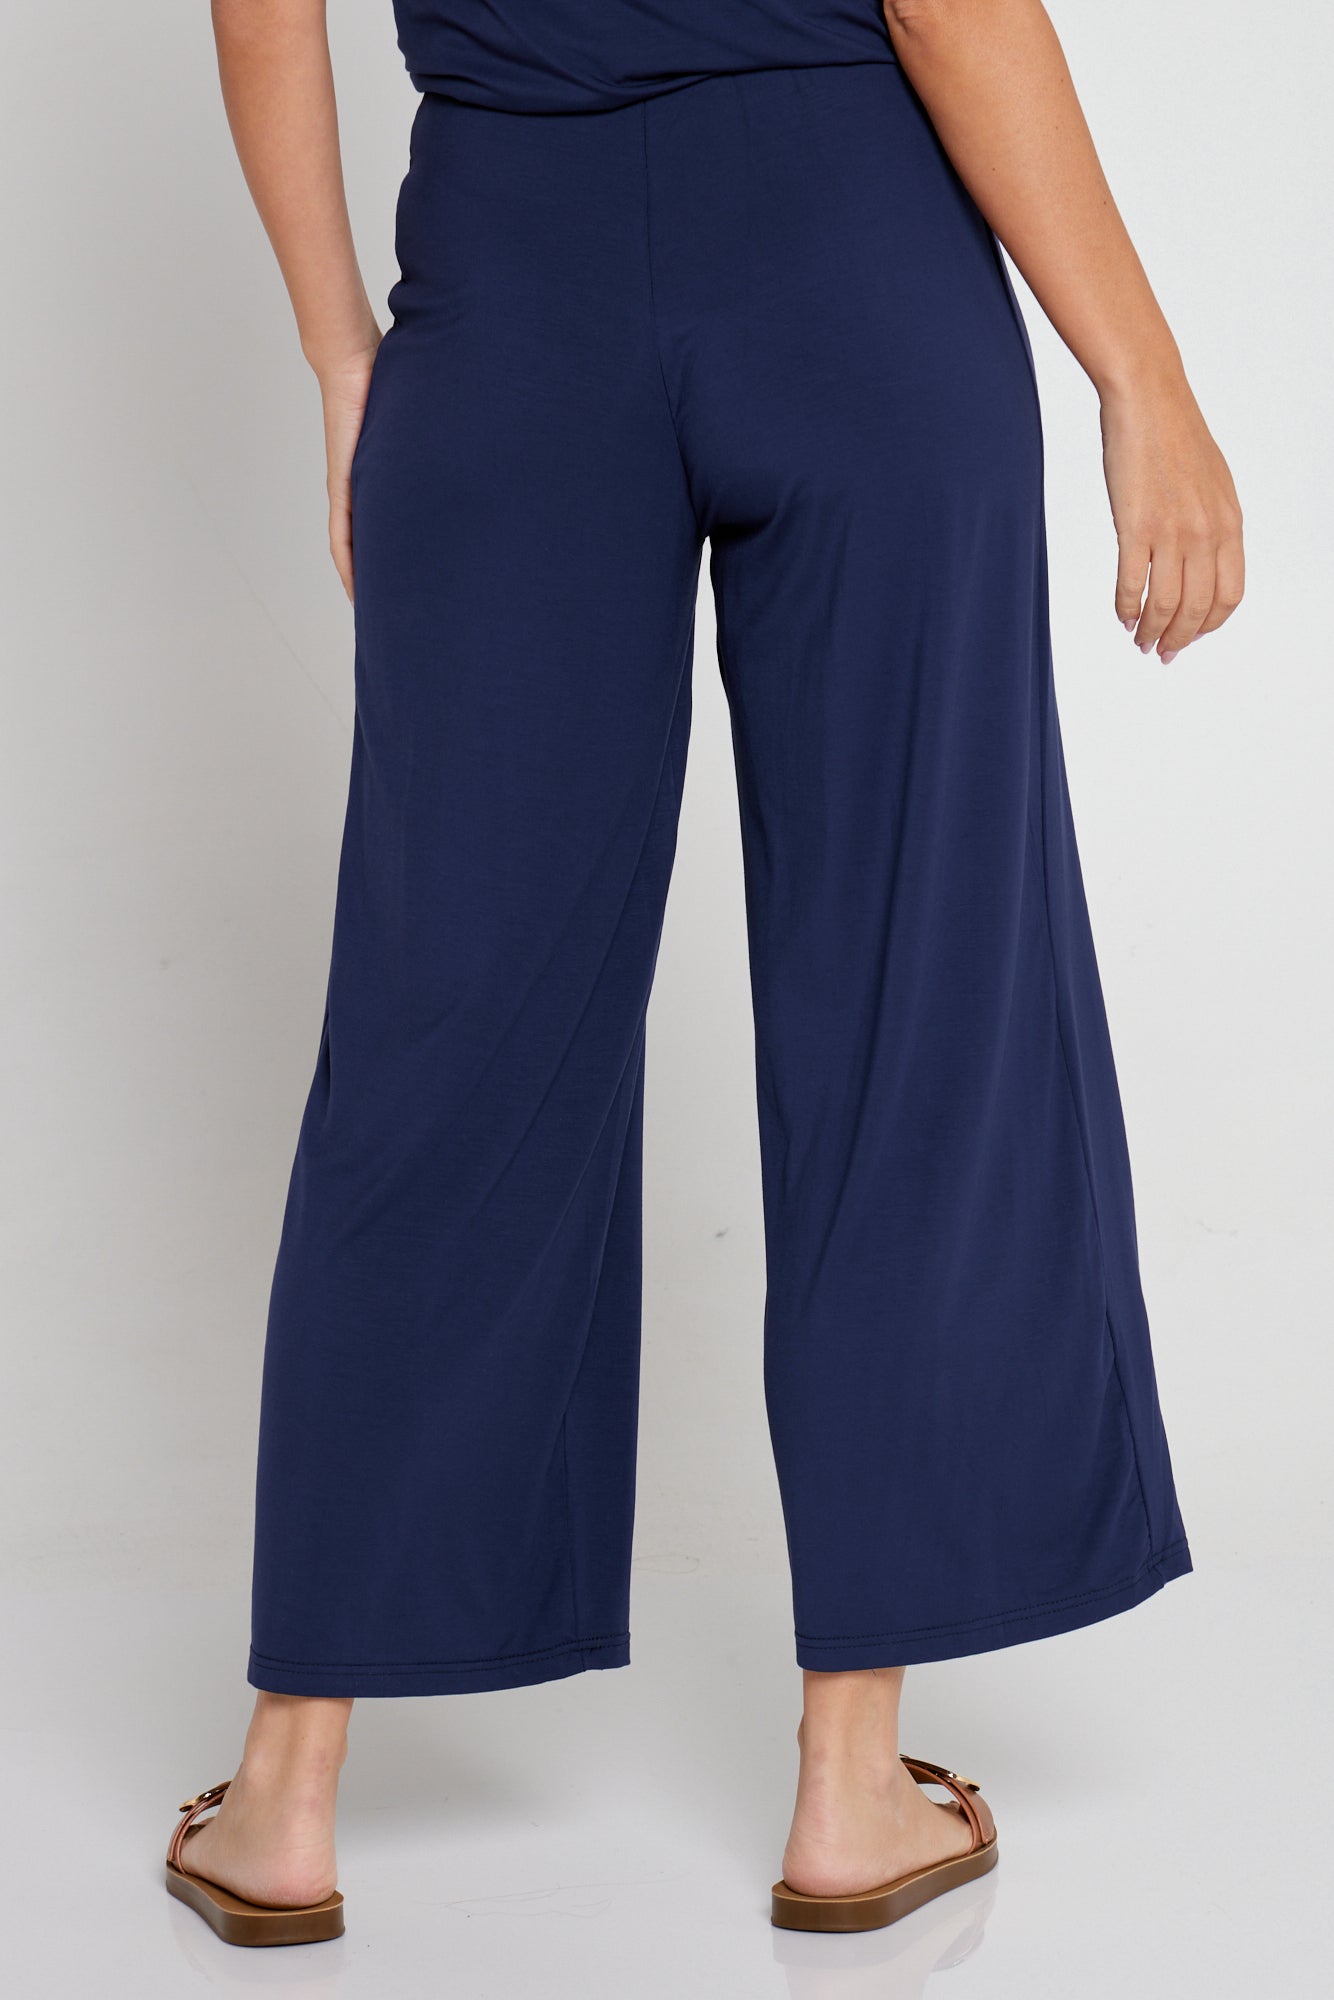 Addison Modal Pants - Navy